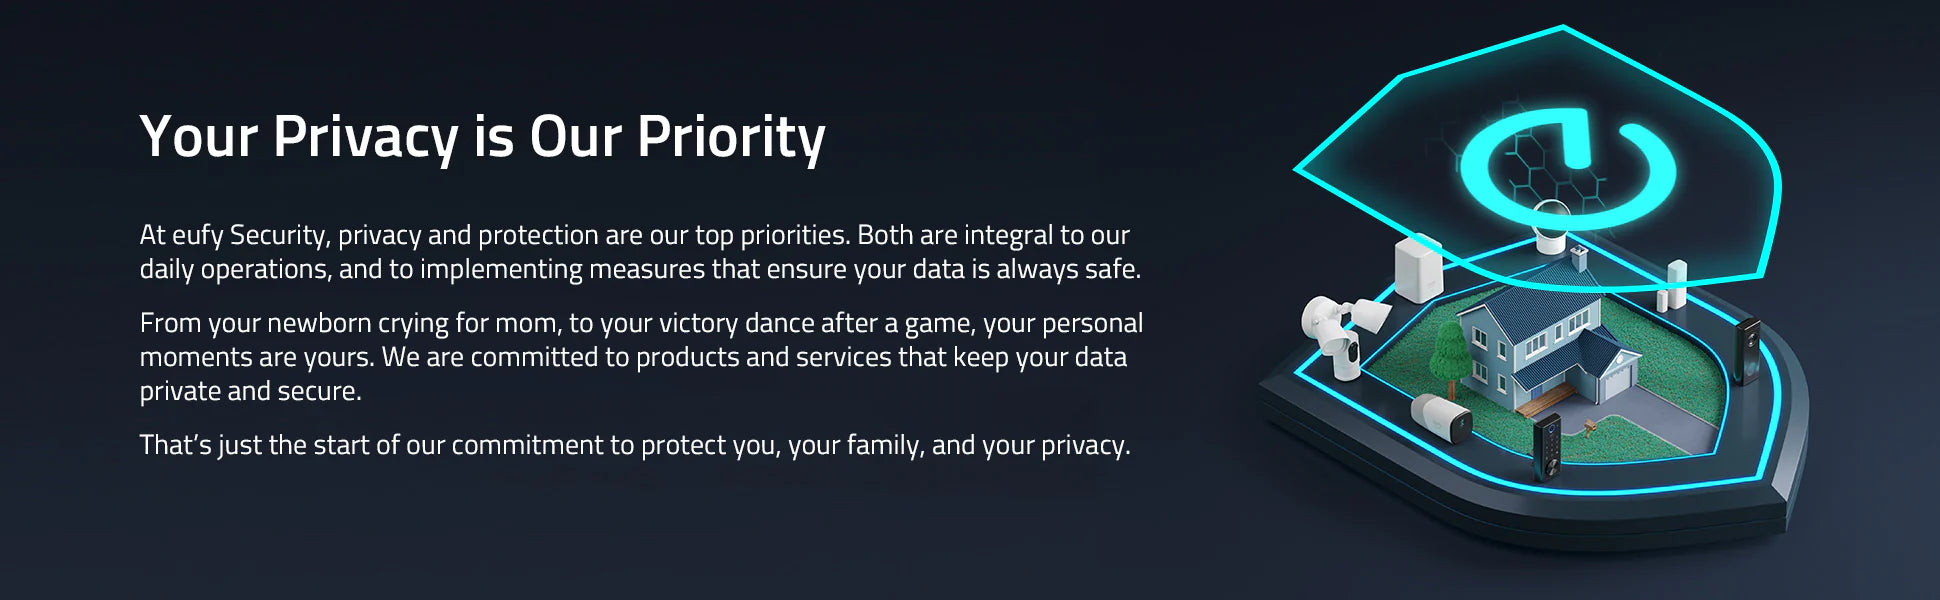 Your_Privacy_is_Our_Priority_be79c4e4-de32-46e6-a5bd-8c09c88bf5f9.webp__PID:cc48dfe3-d8b1-46ad-8e58-08d73f236749